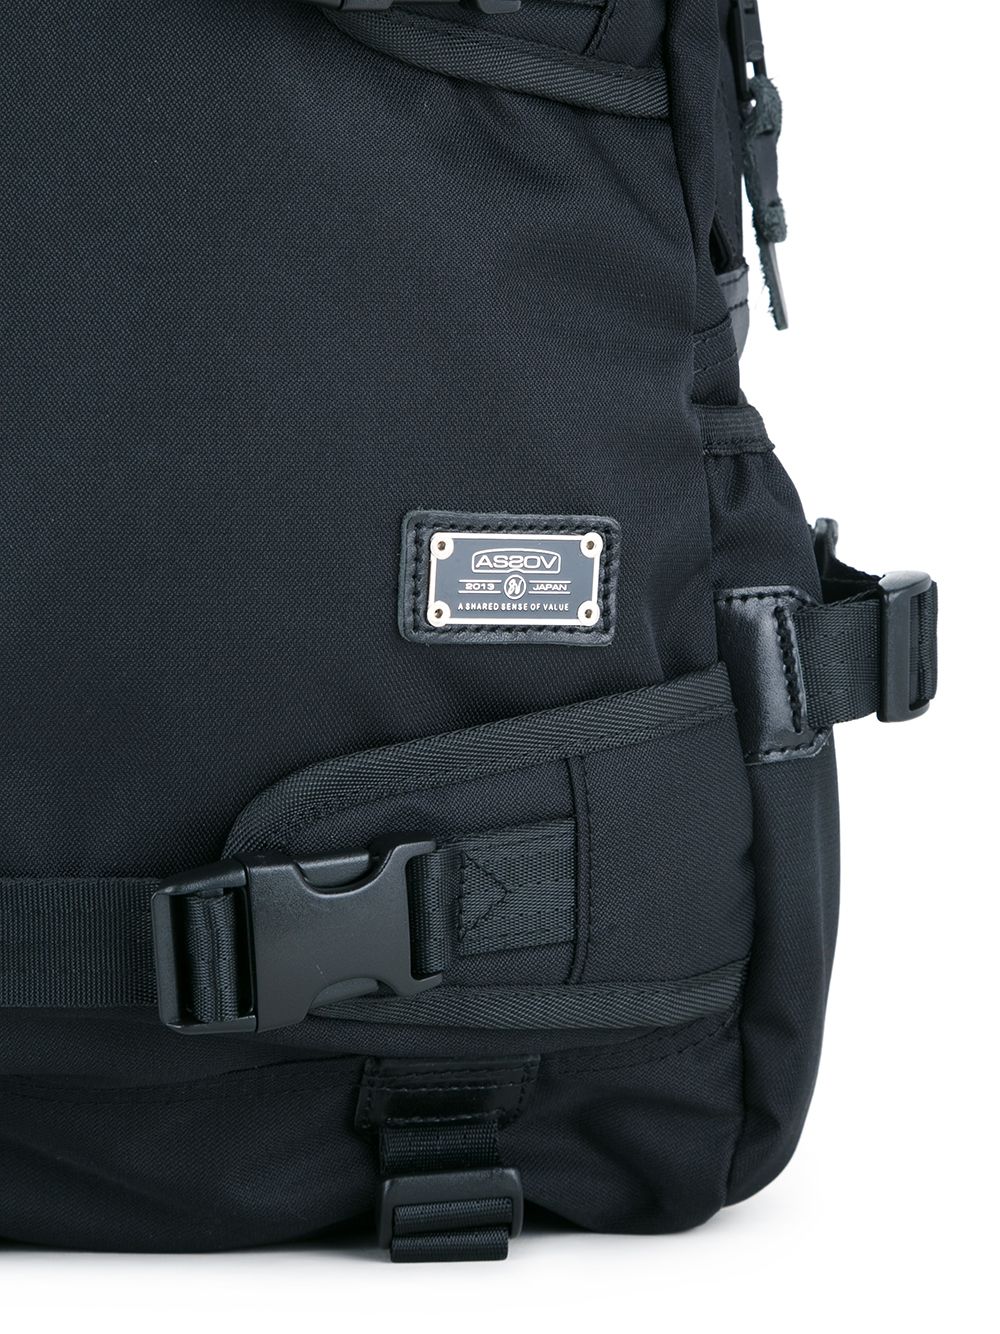 Shop As2ov Cordura Dobby 305d Backpack In Black